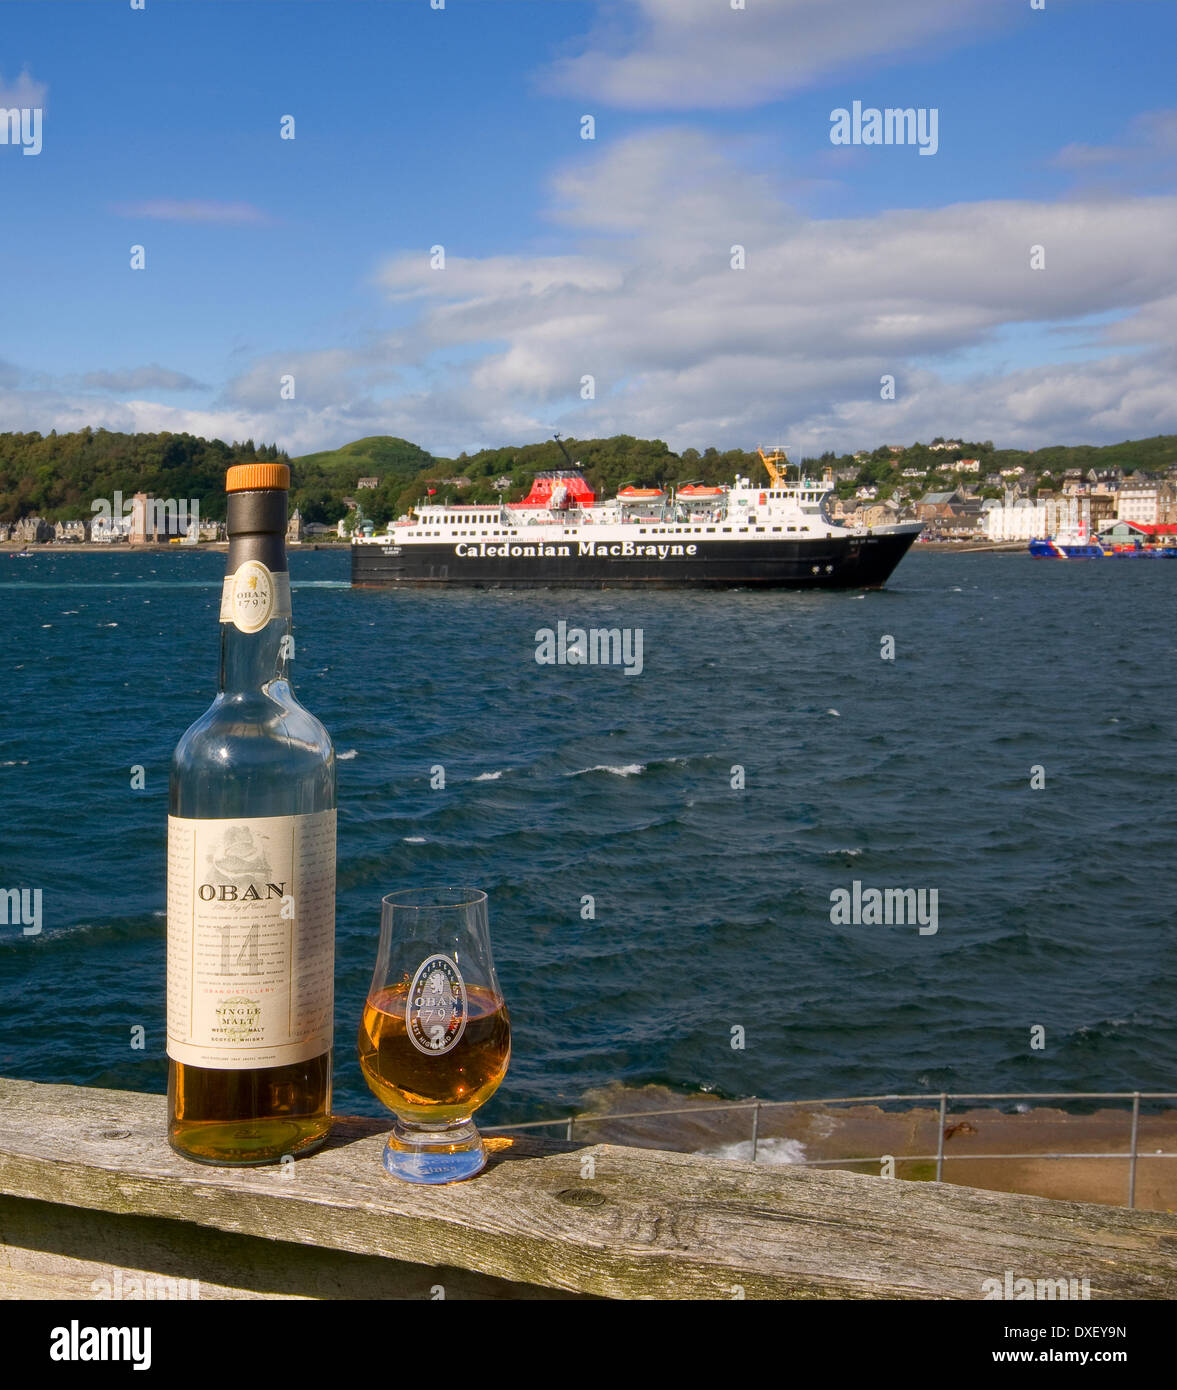 Vetro e bottiglia di Oban sing-malt whisky, con mull ferry in vista, Oban, Argyll Foto Stock